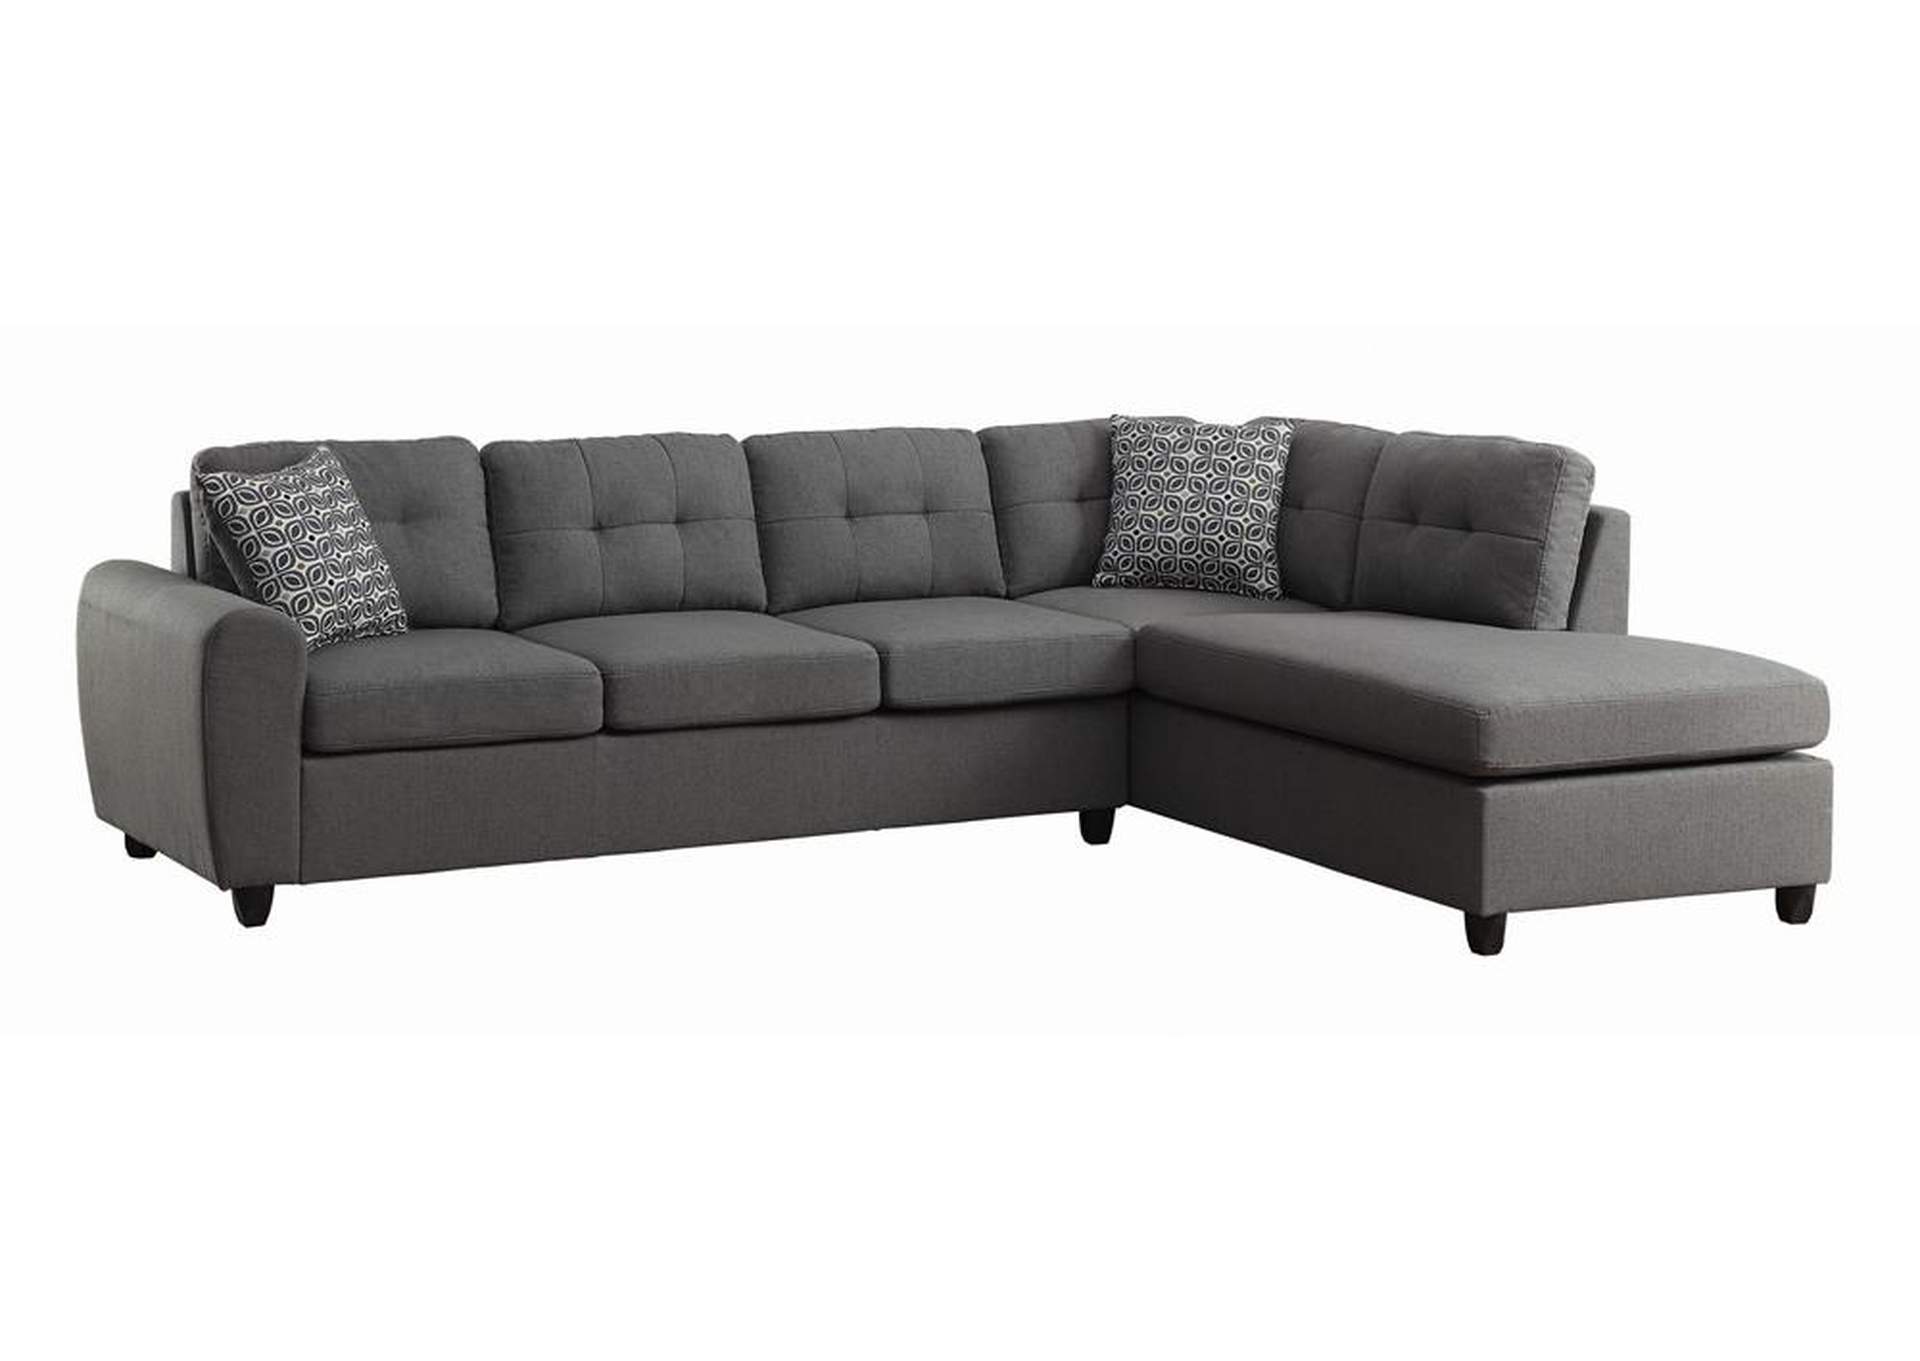 Tundora Stonenesse Contemporary Grey Sectional,Coaster Furniture